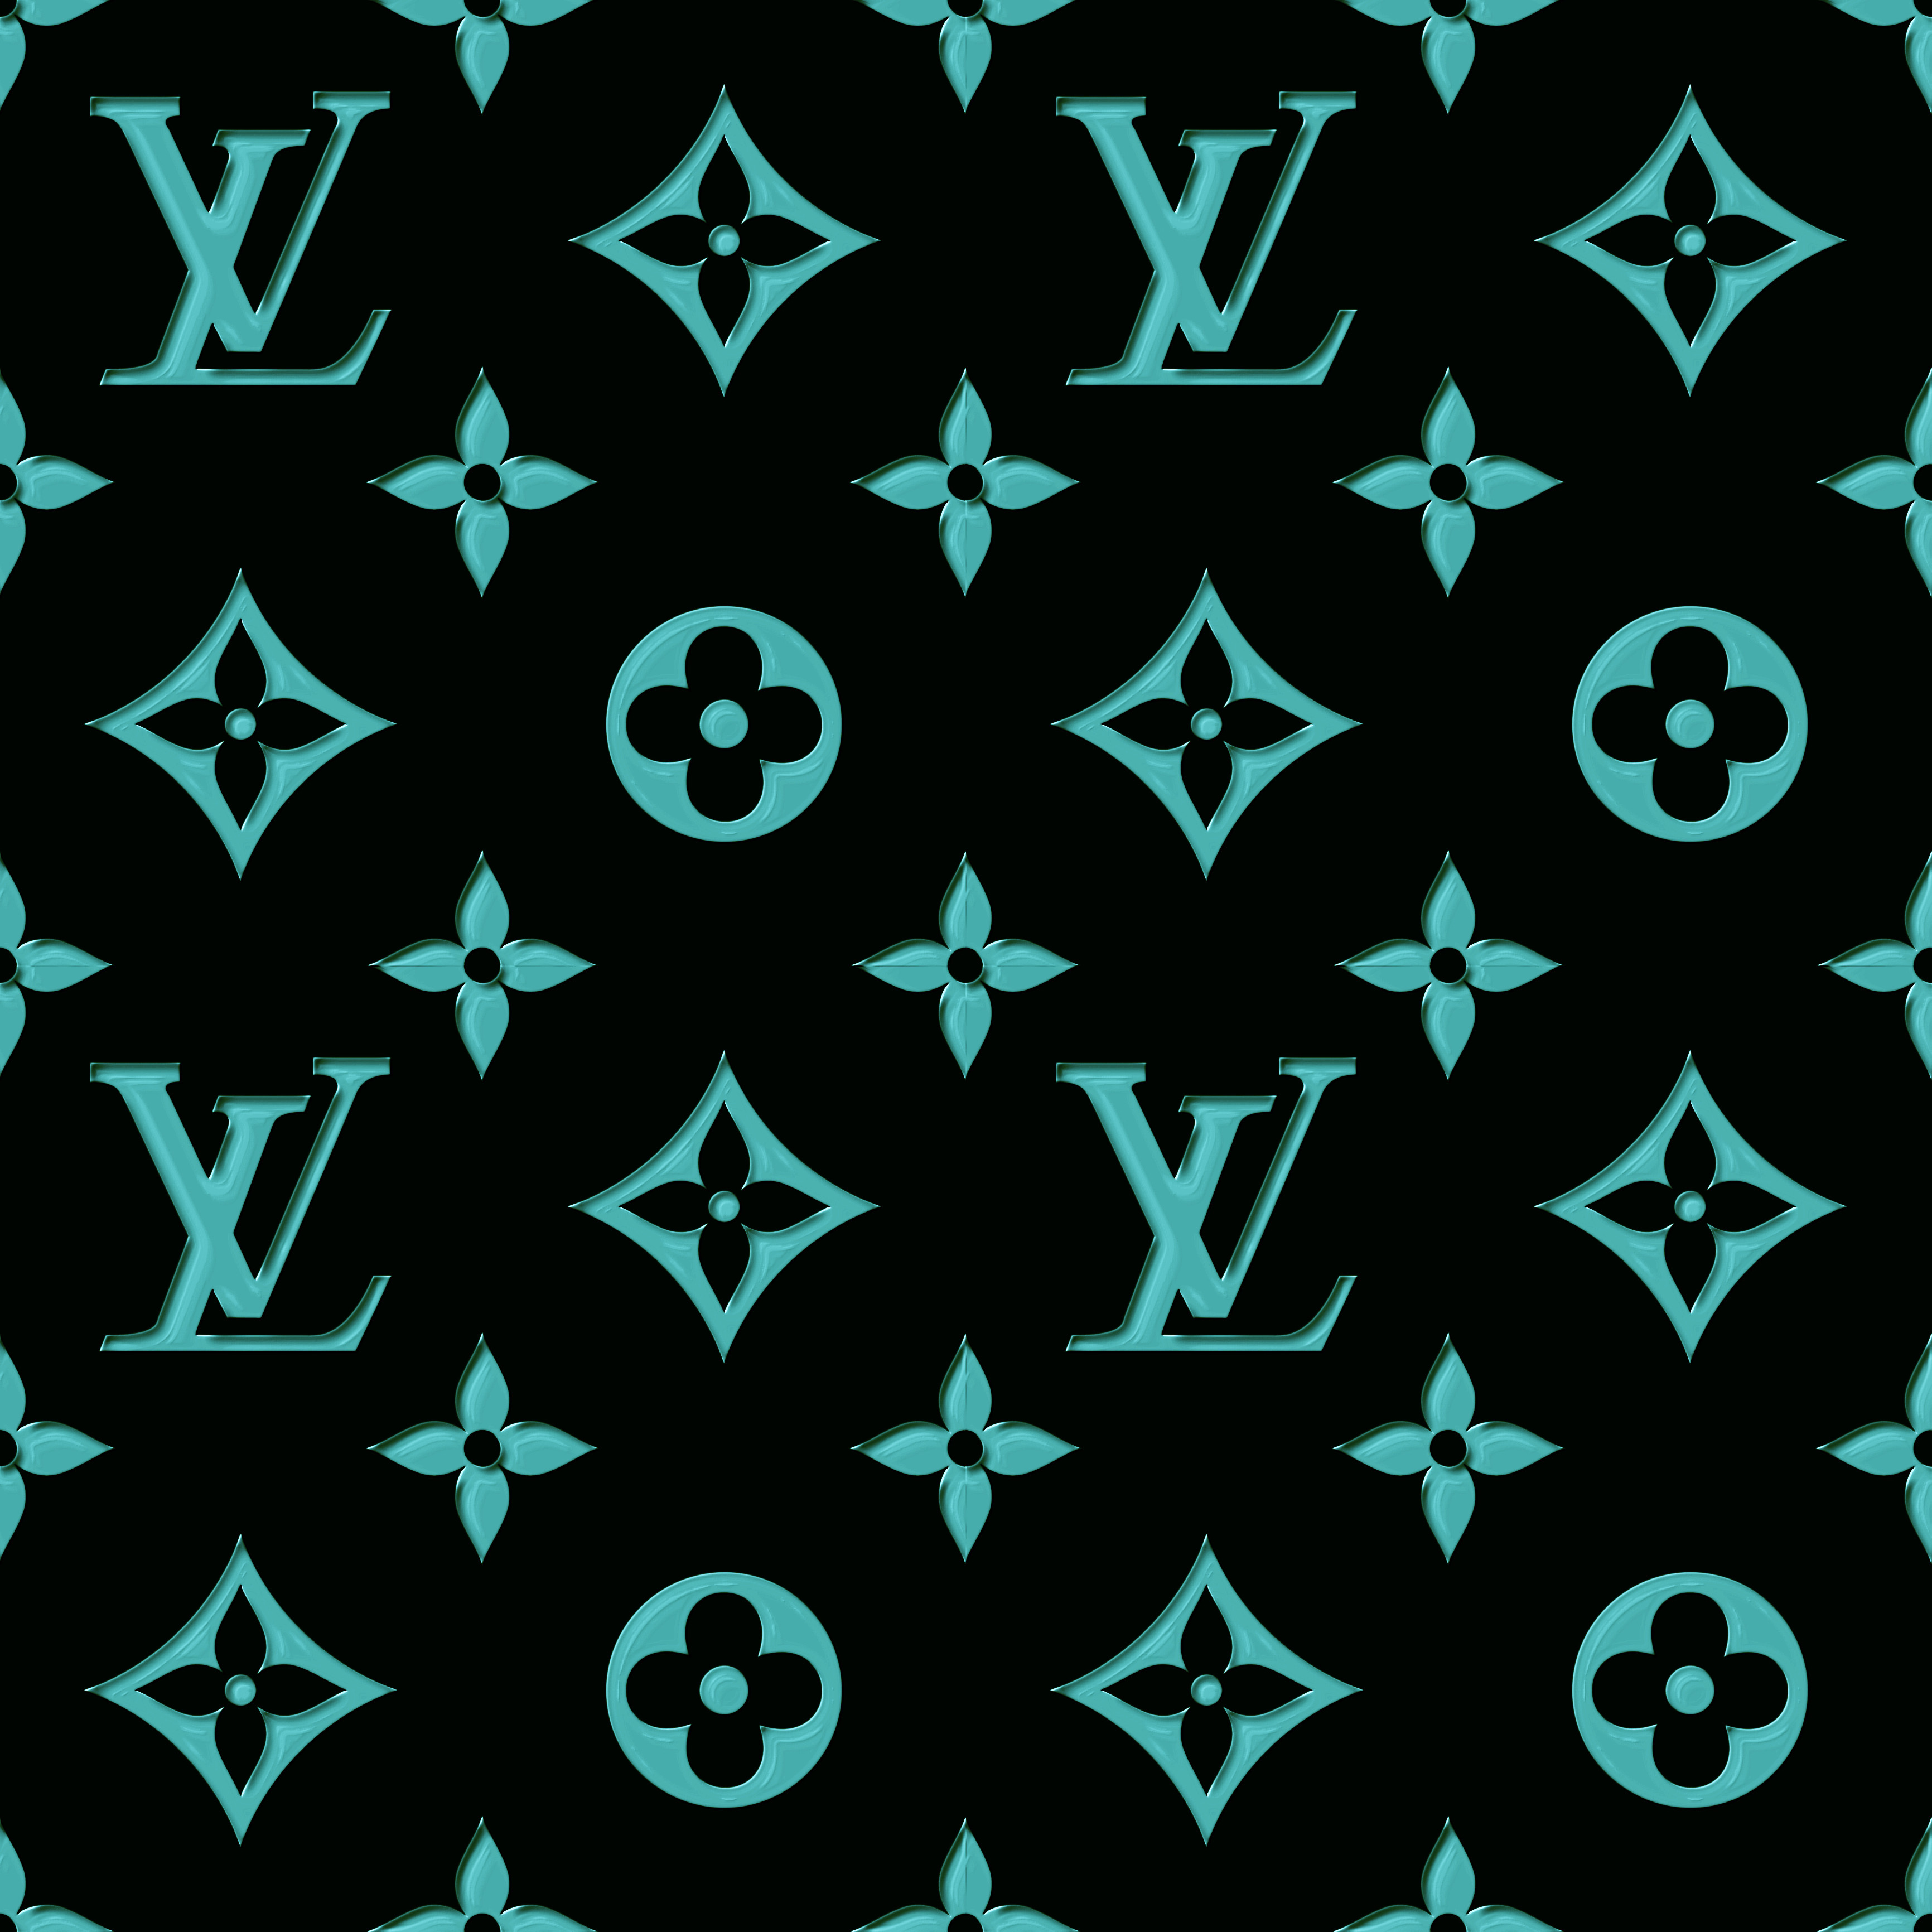 Disney Seamless Patterns, Vol. 2: Louis Vuitton by itsfarahbakhsh on  DeviantArt